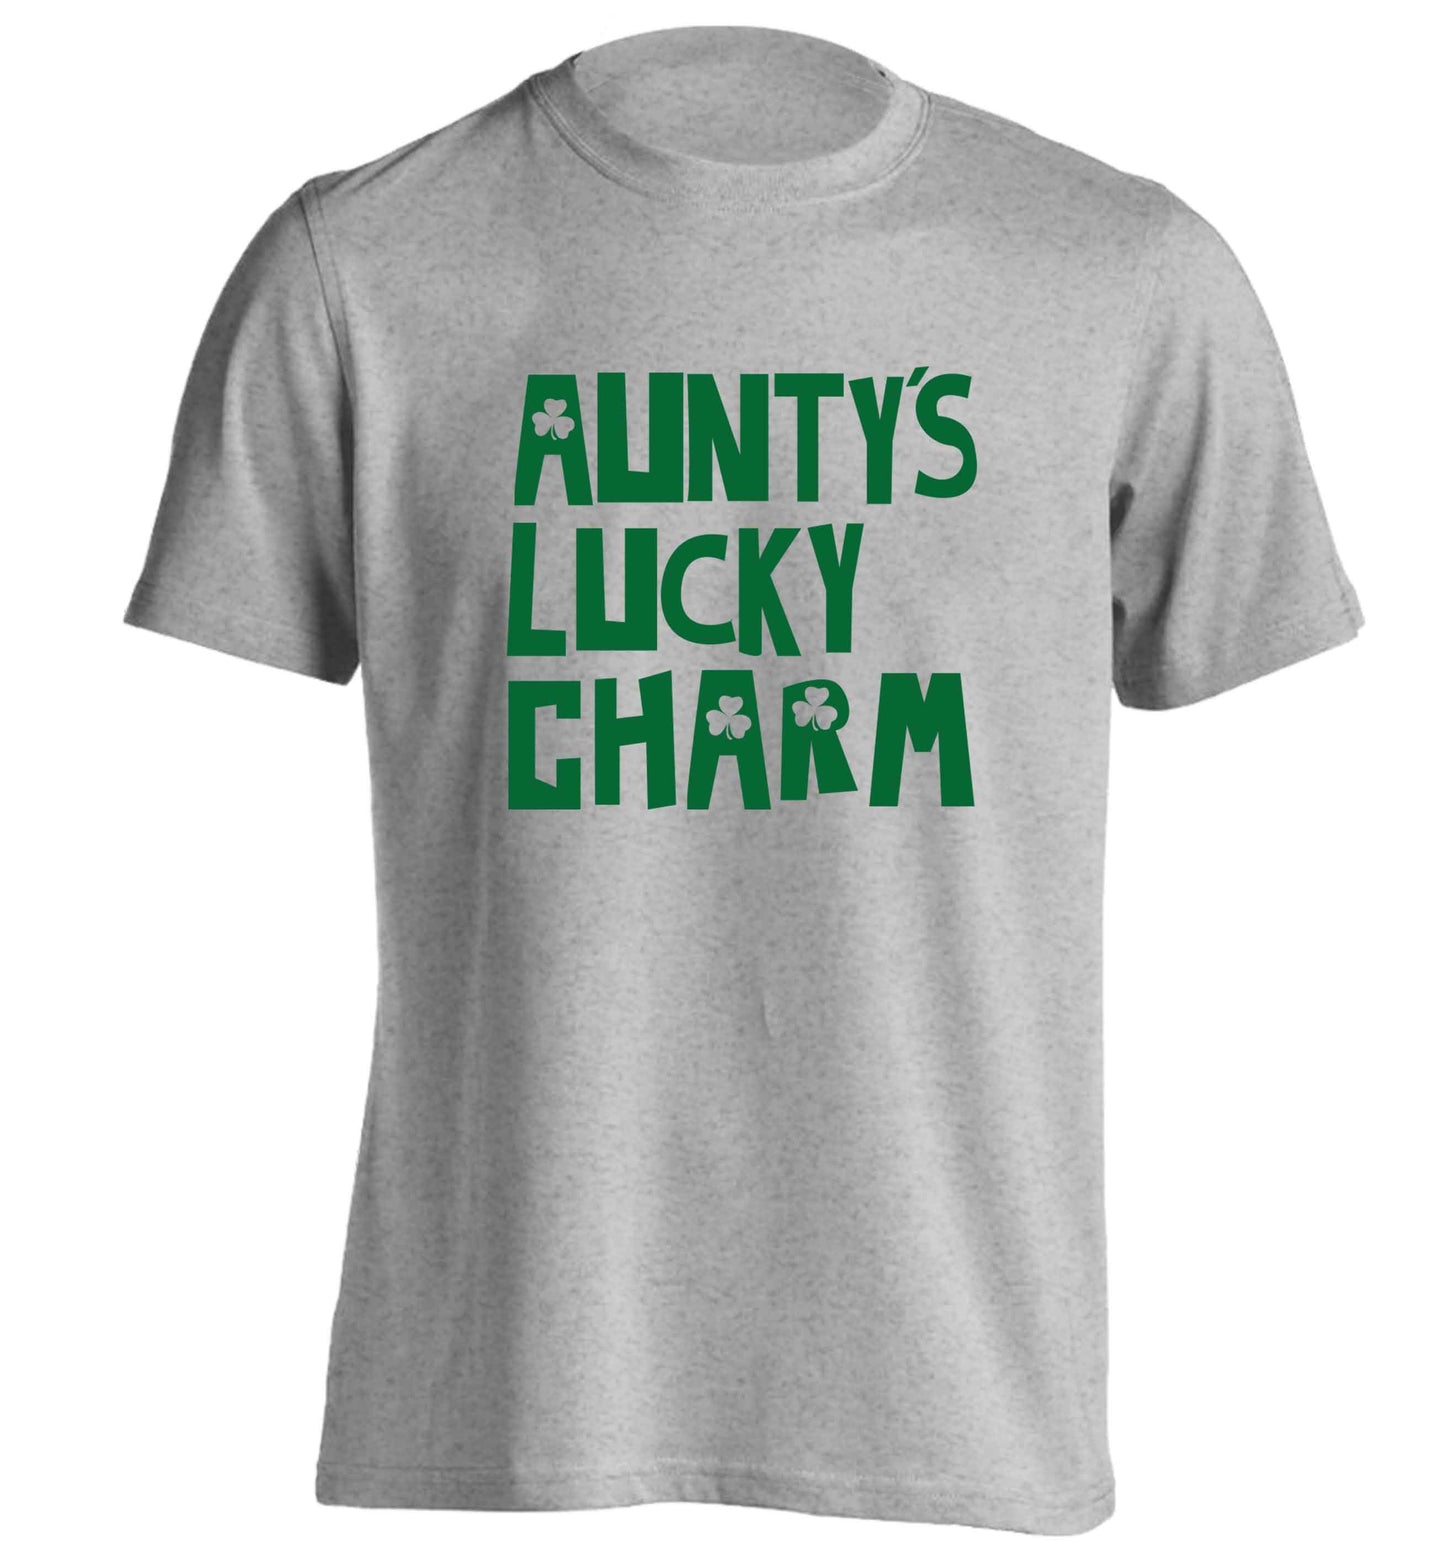 Aunty's lucky charm adults unisex grey Tshirt 2XL